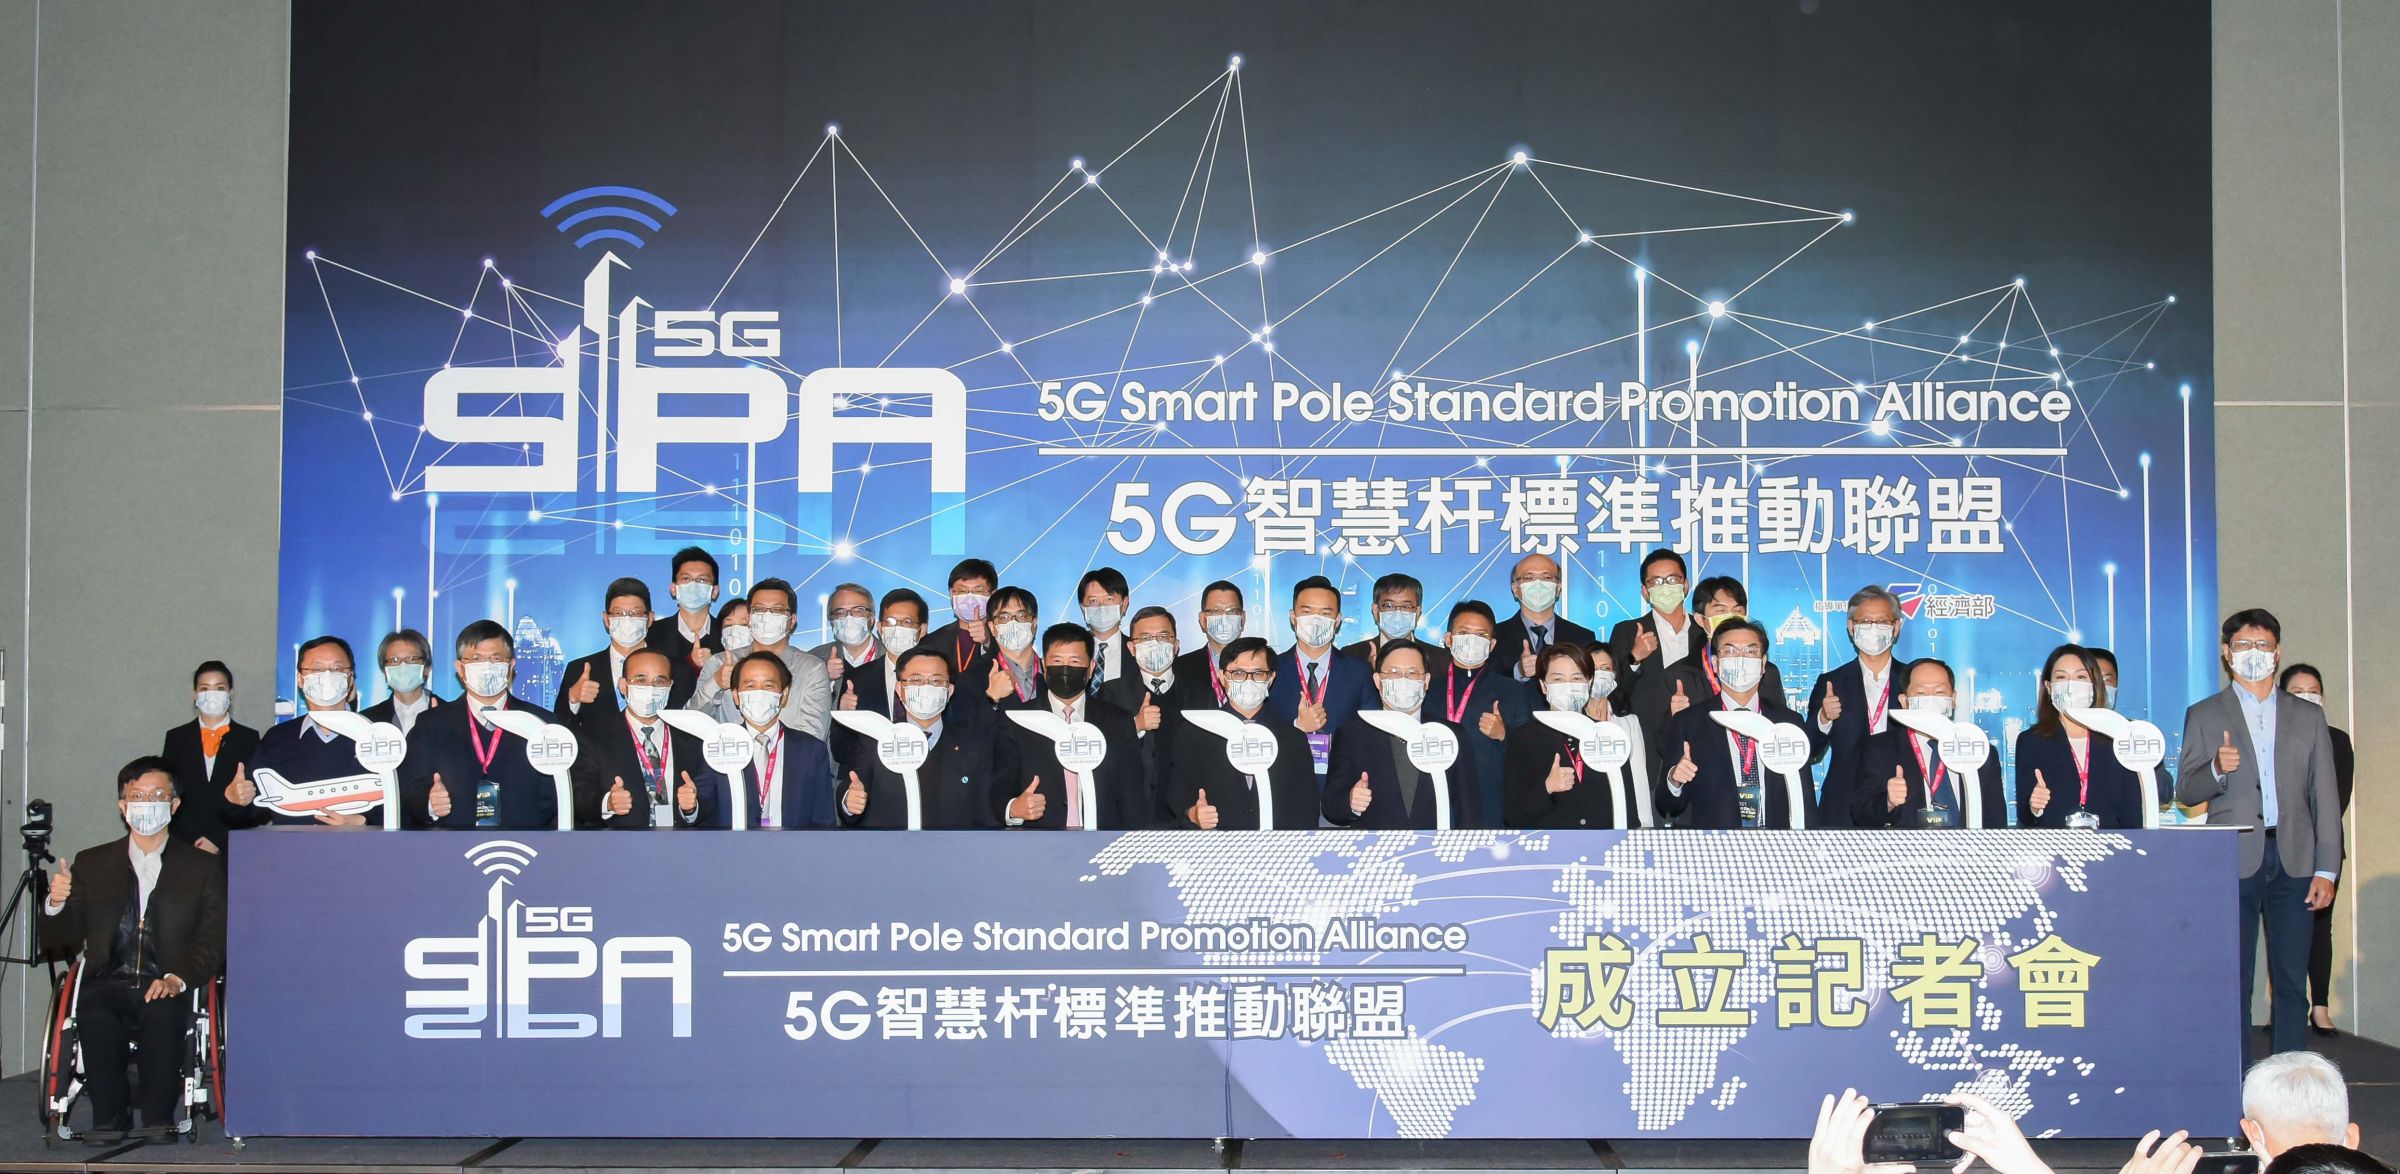 Proscend attended the press conference of 5G Smart Pole Standard Promotion Alliance.